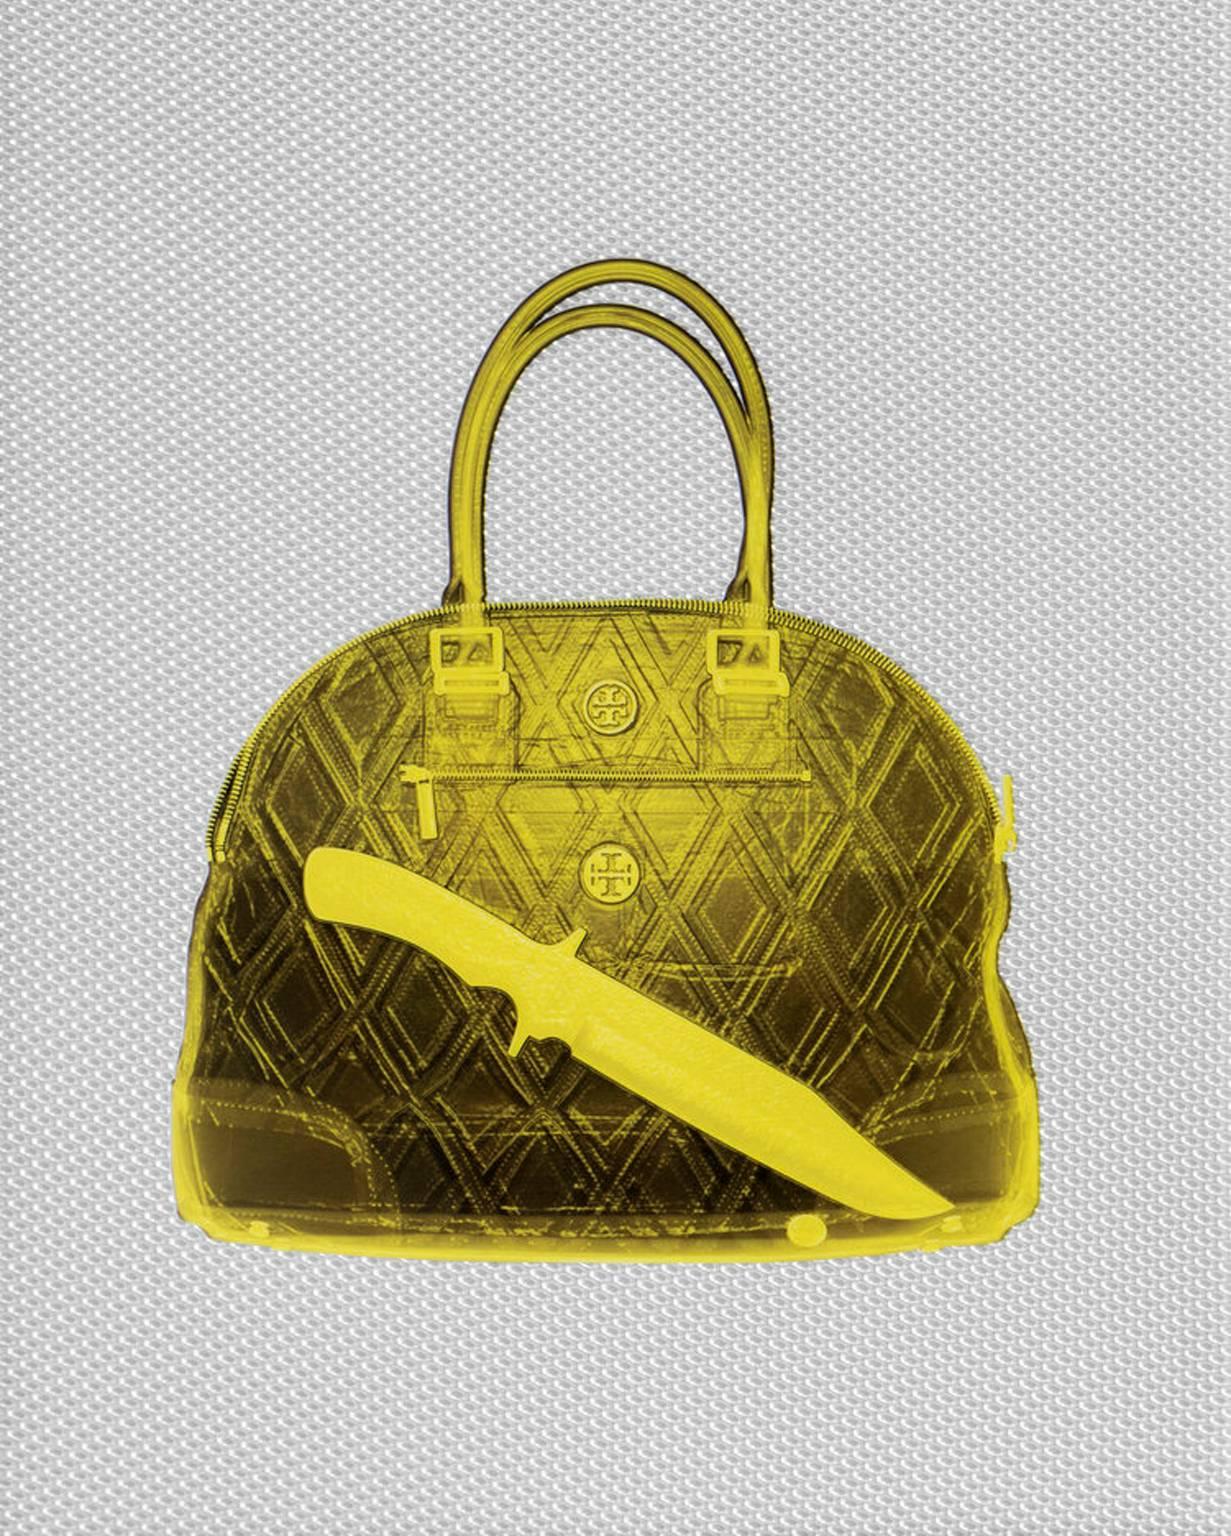 Color Photograph, "Gold Tory Burch Handbag with Knife" (Fashion, Designer Bag) - Print by Blazo Kovacevic